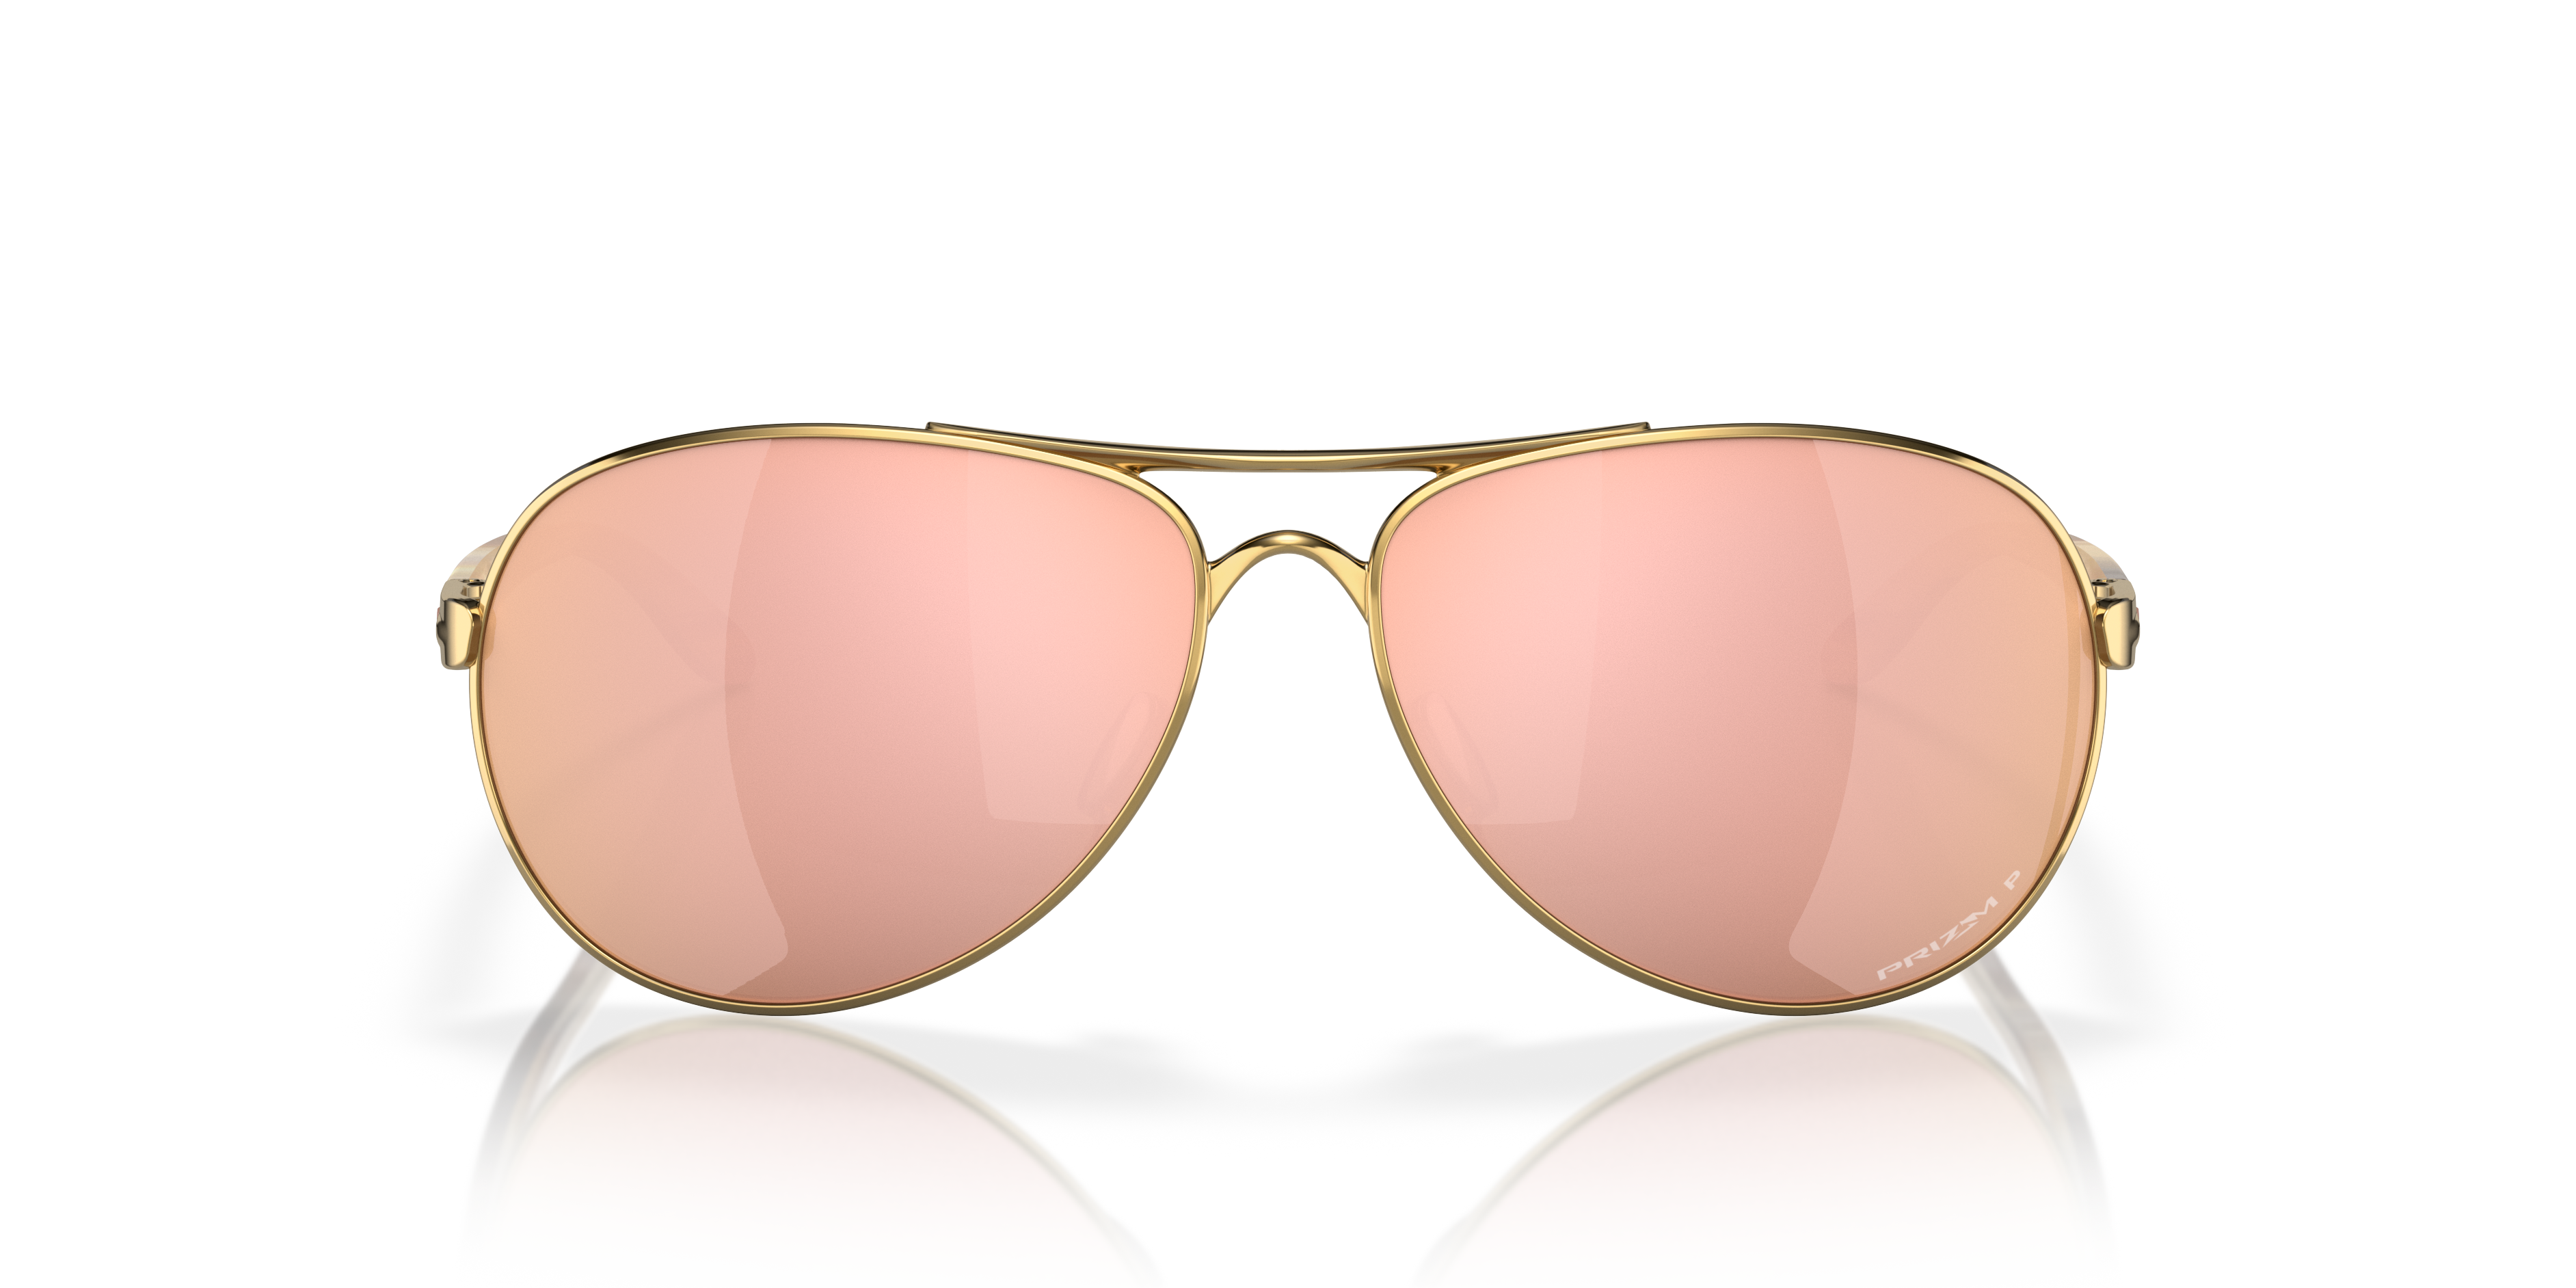 Oakley Sunglasses for Men & Women - Get up to 70% off RRP – Fashion Eyewear  UK